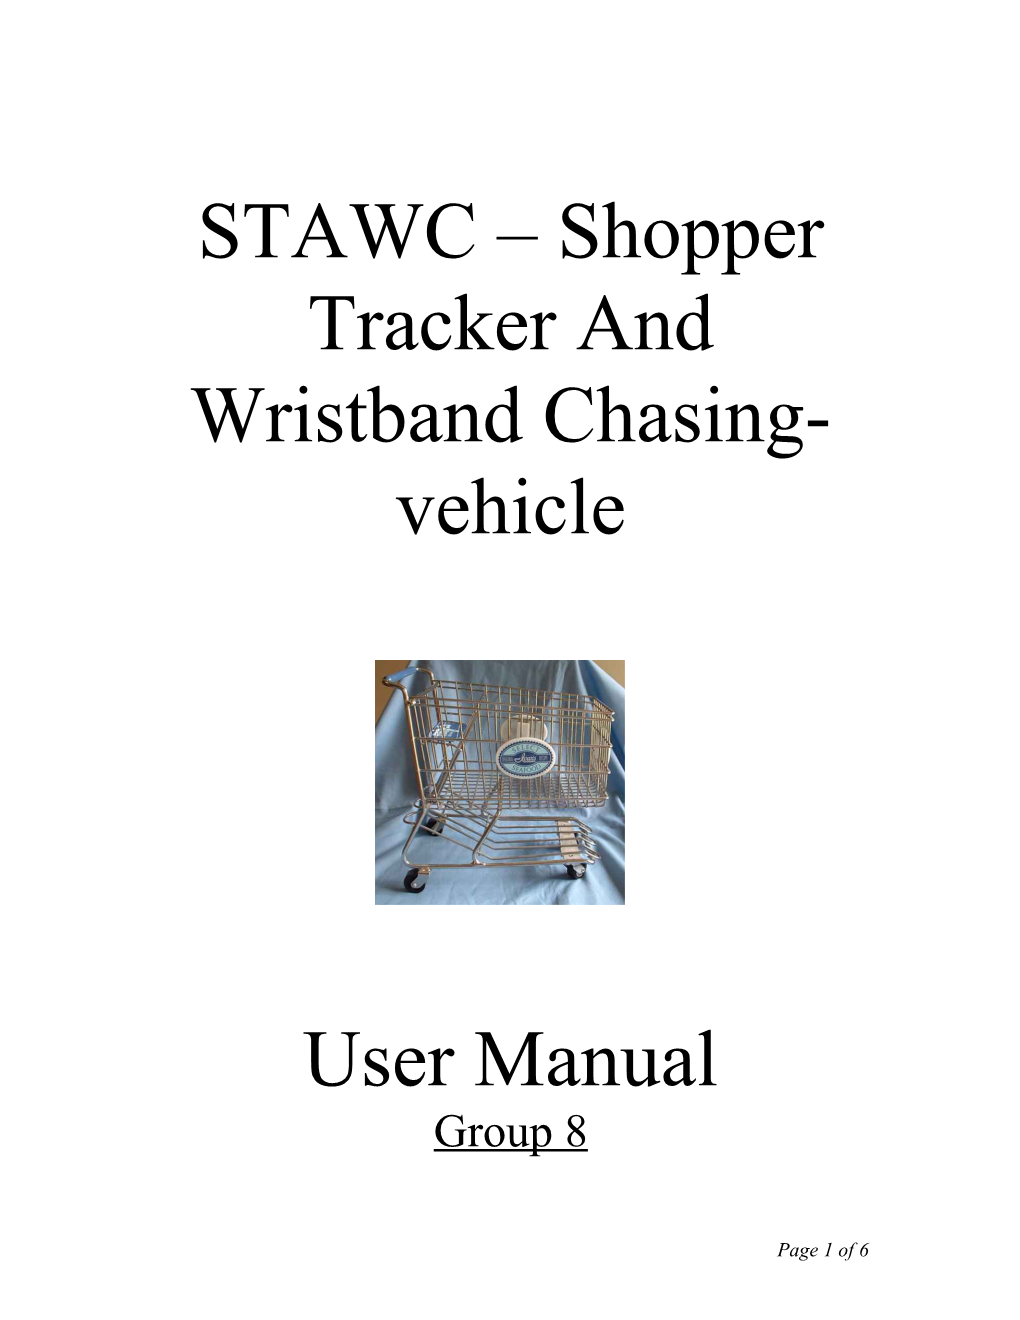 STAWC Shopper Tracker and Wristband Chasing-Vehicle